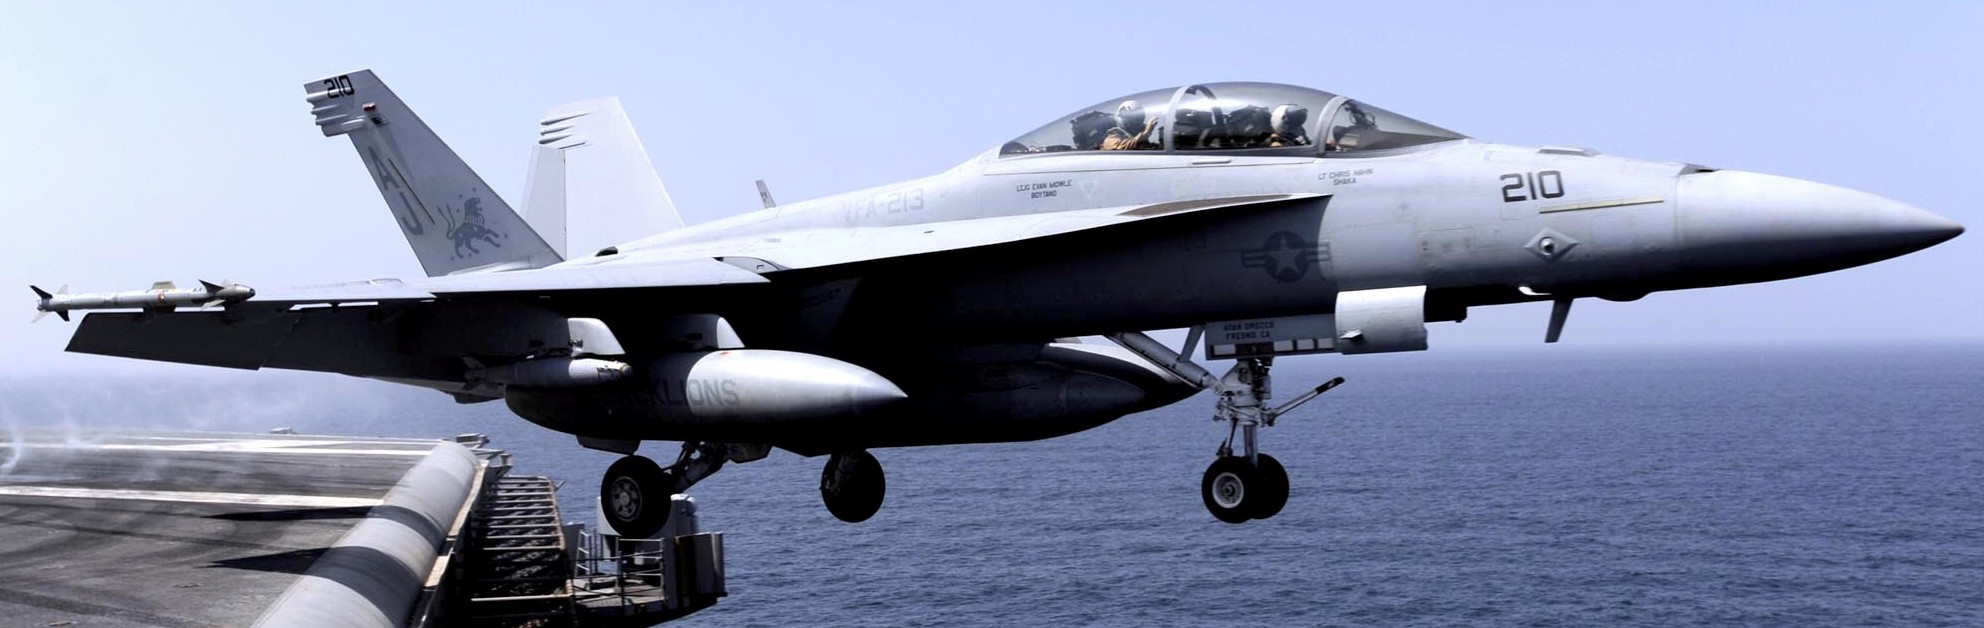 vfa-213 black lions strike fighter squadron us navy f/a-18f super hornet cvw-8 uss theodore roosevelt cvn-71 78